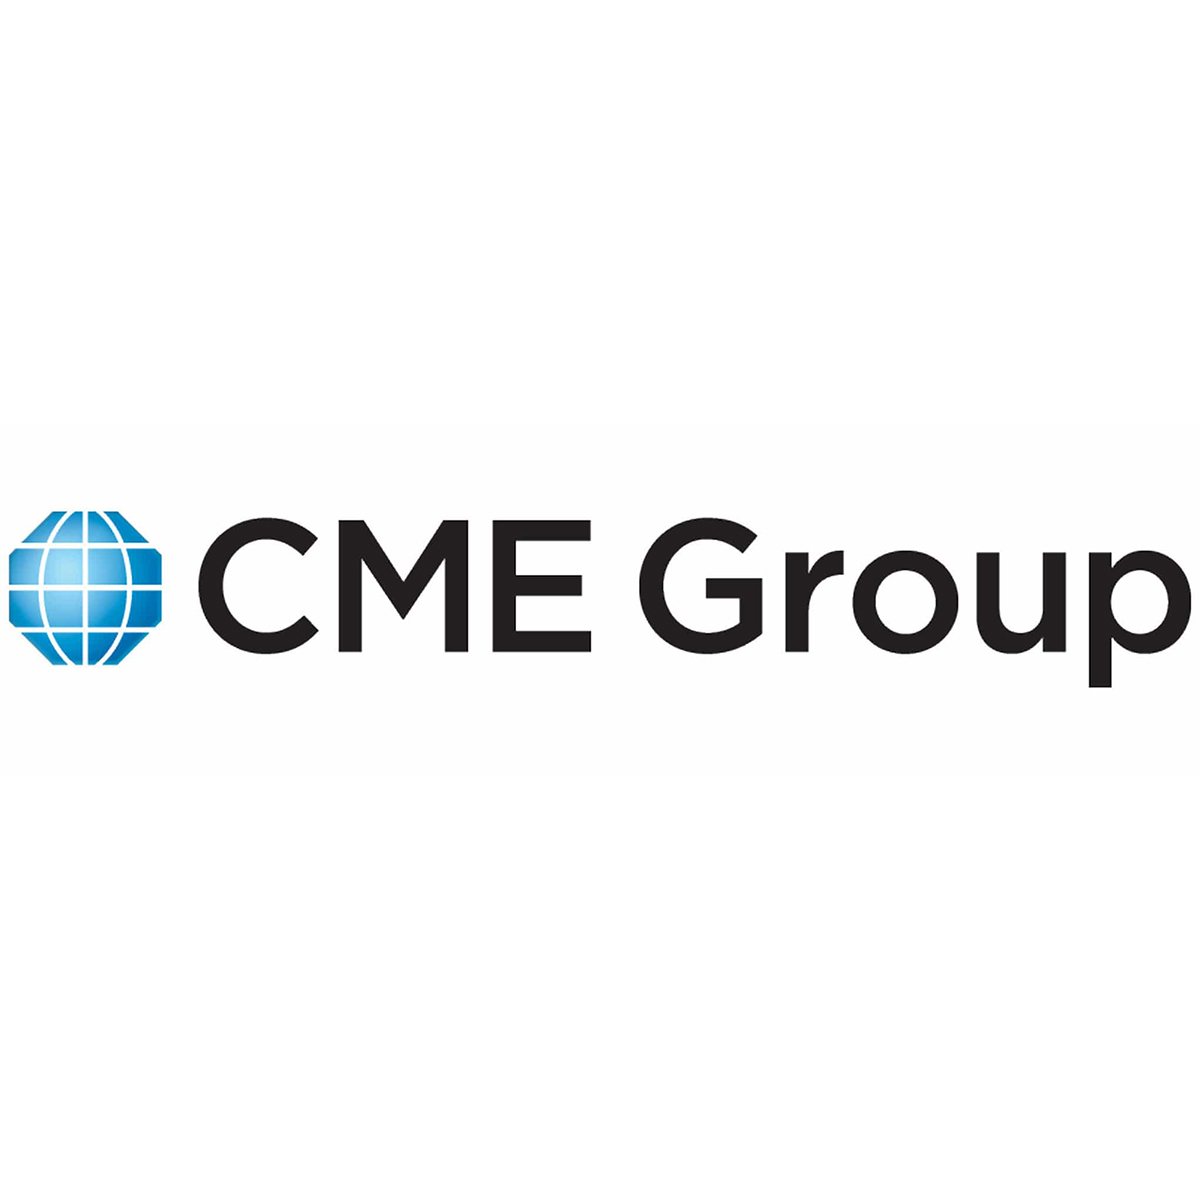 B-CME Group.jpg